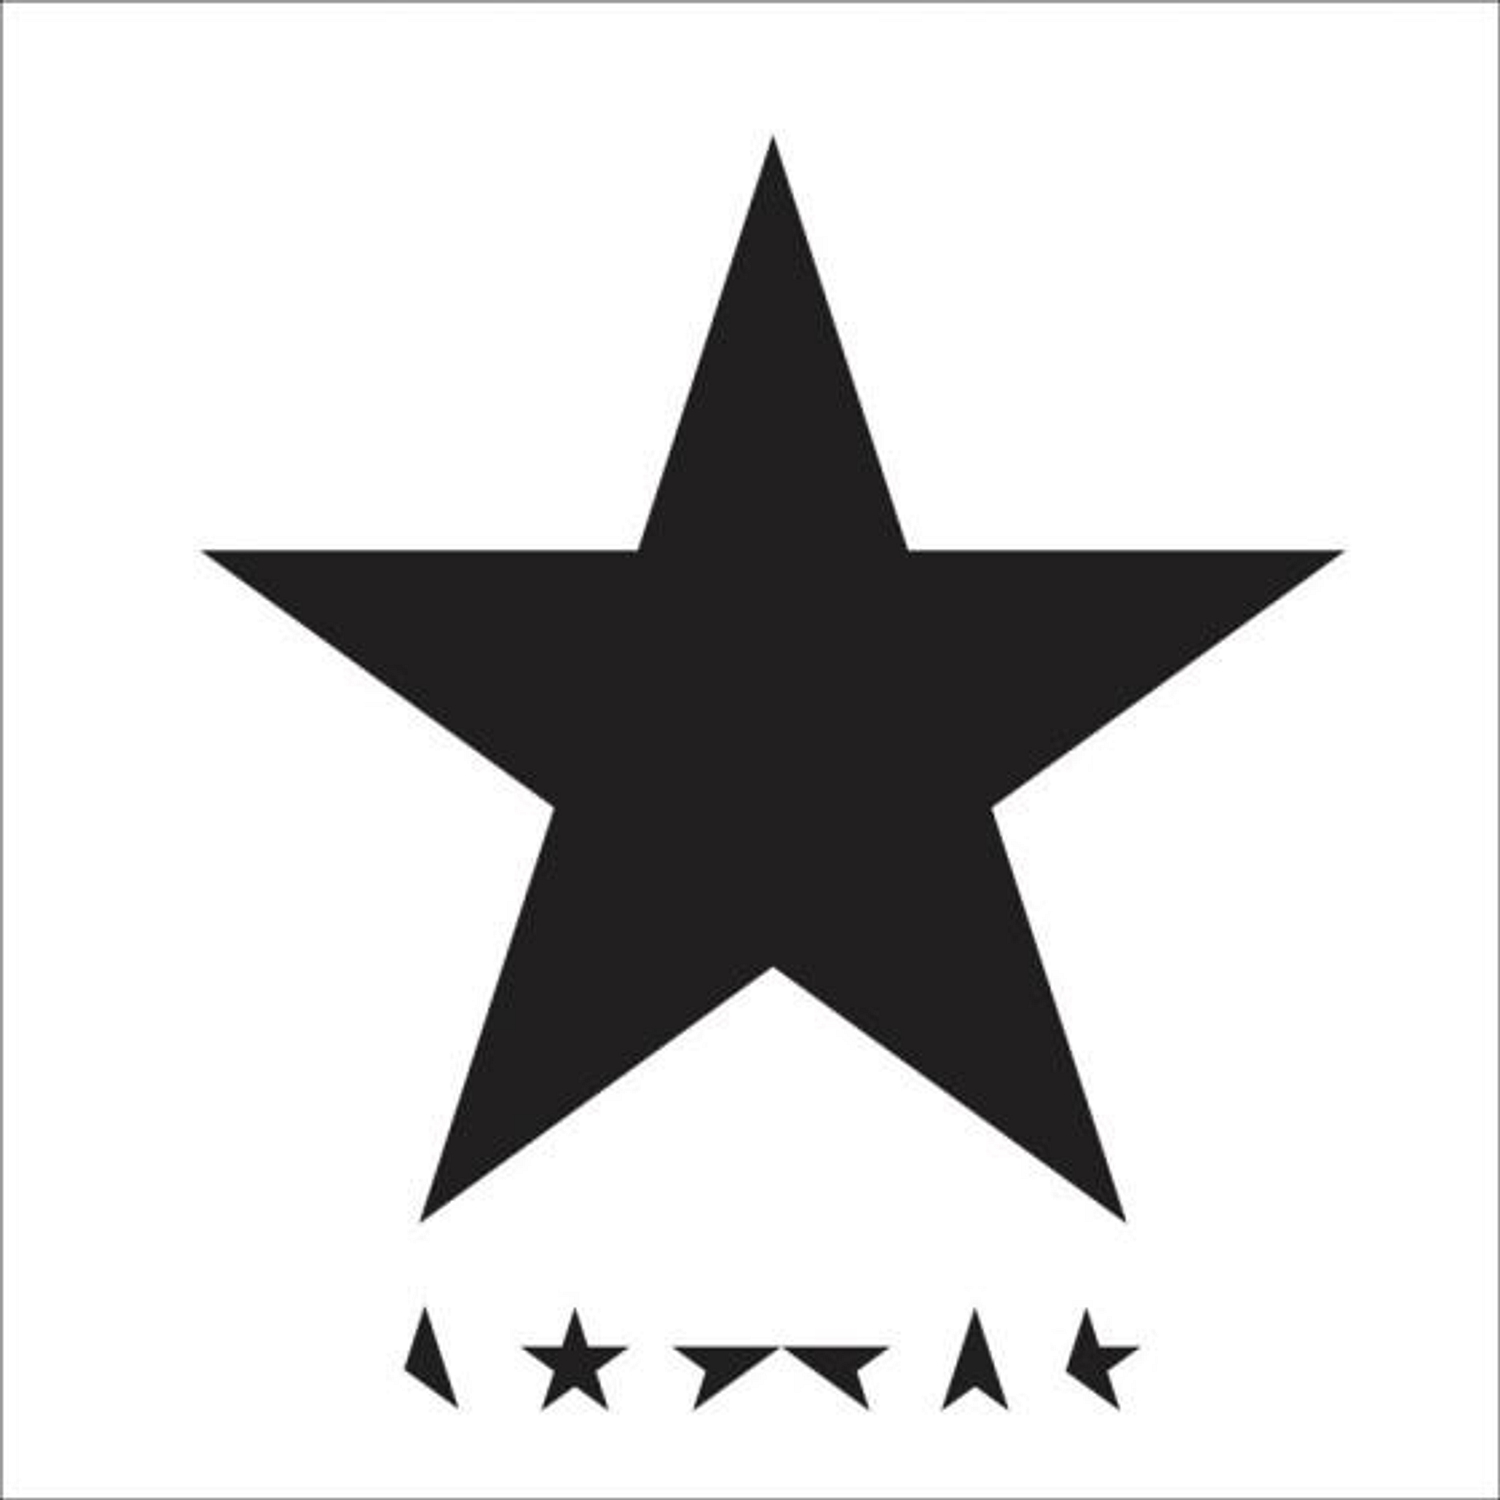 David Bowie announces ‘Blackstar’ short film, new single out tonight